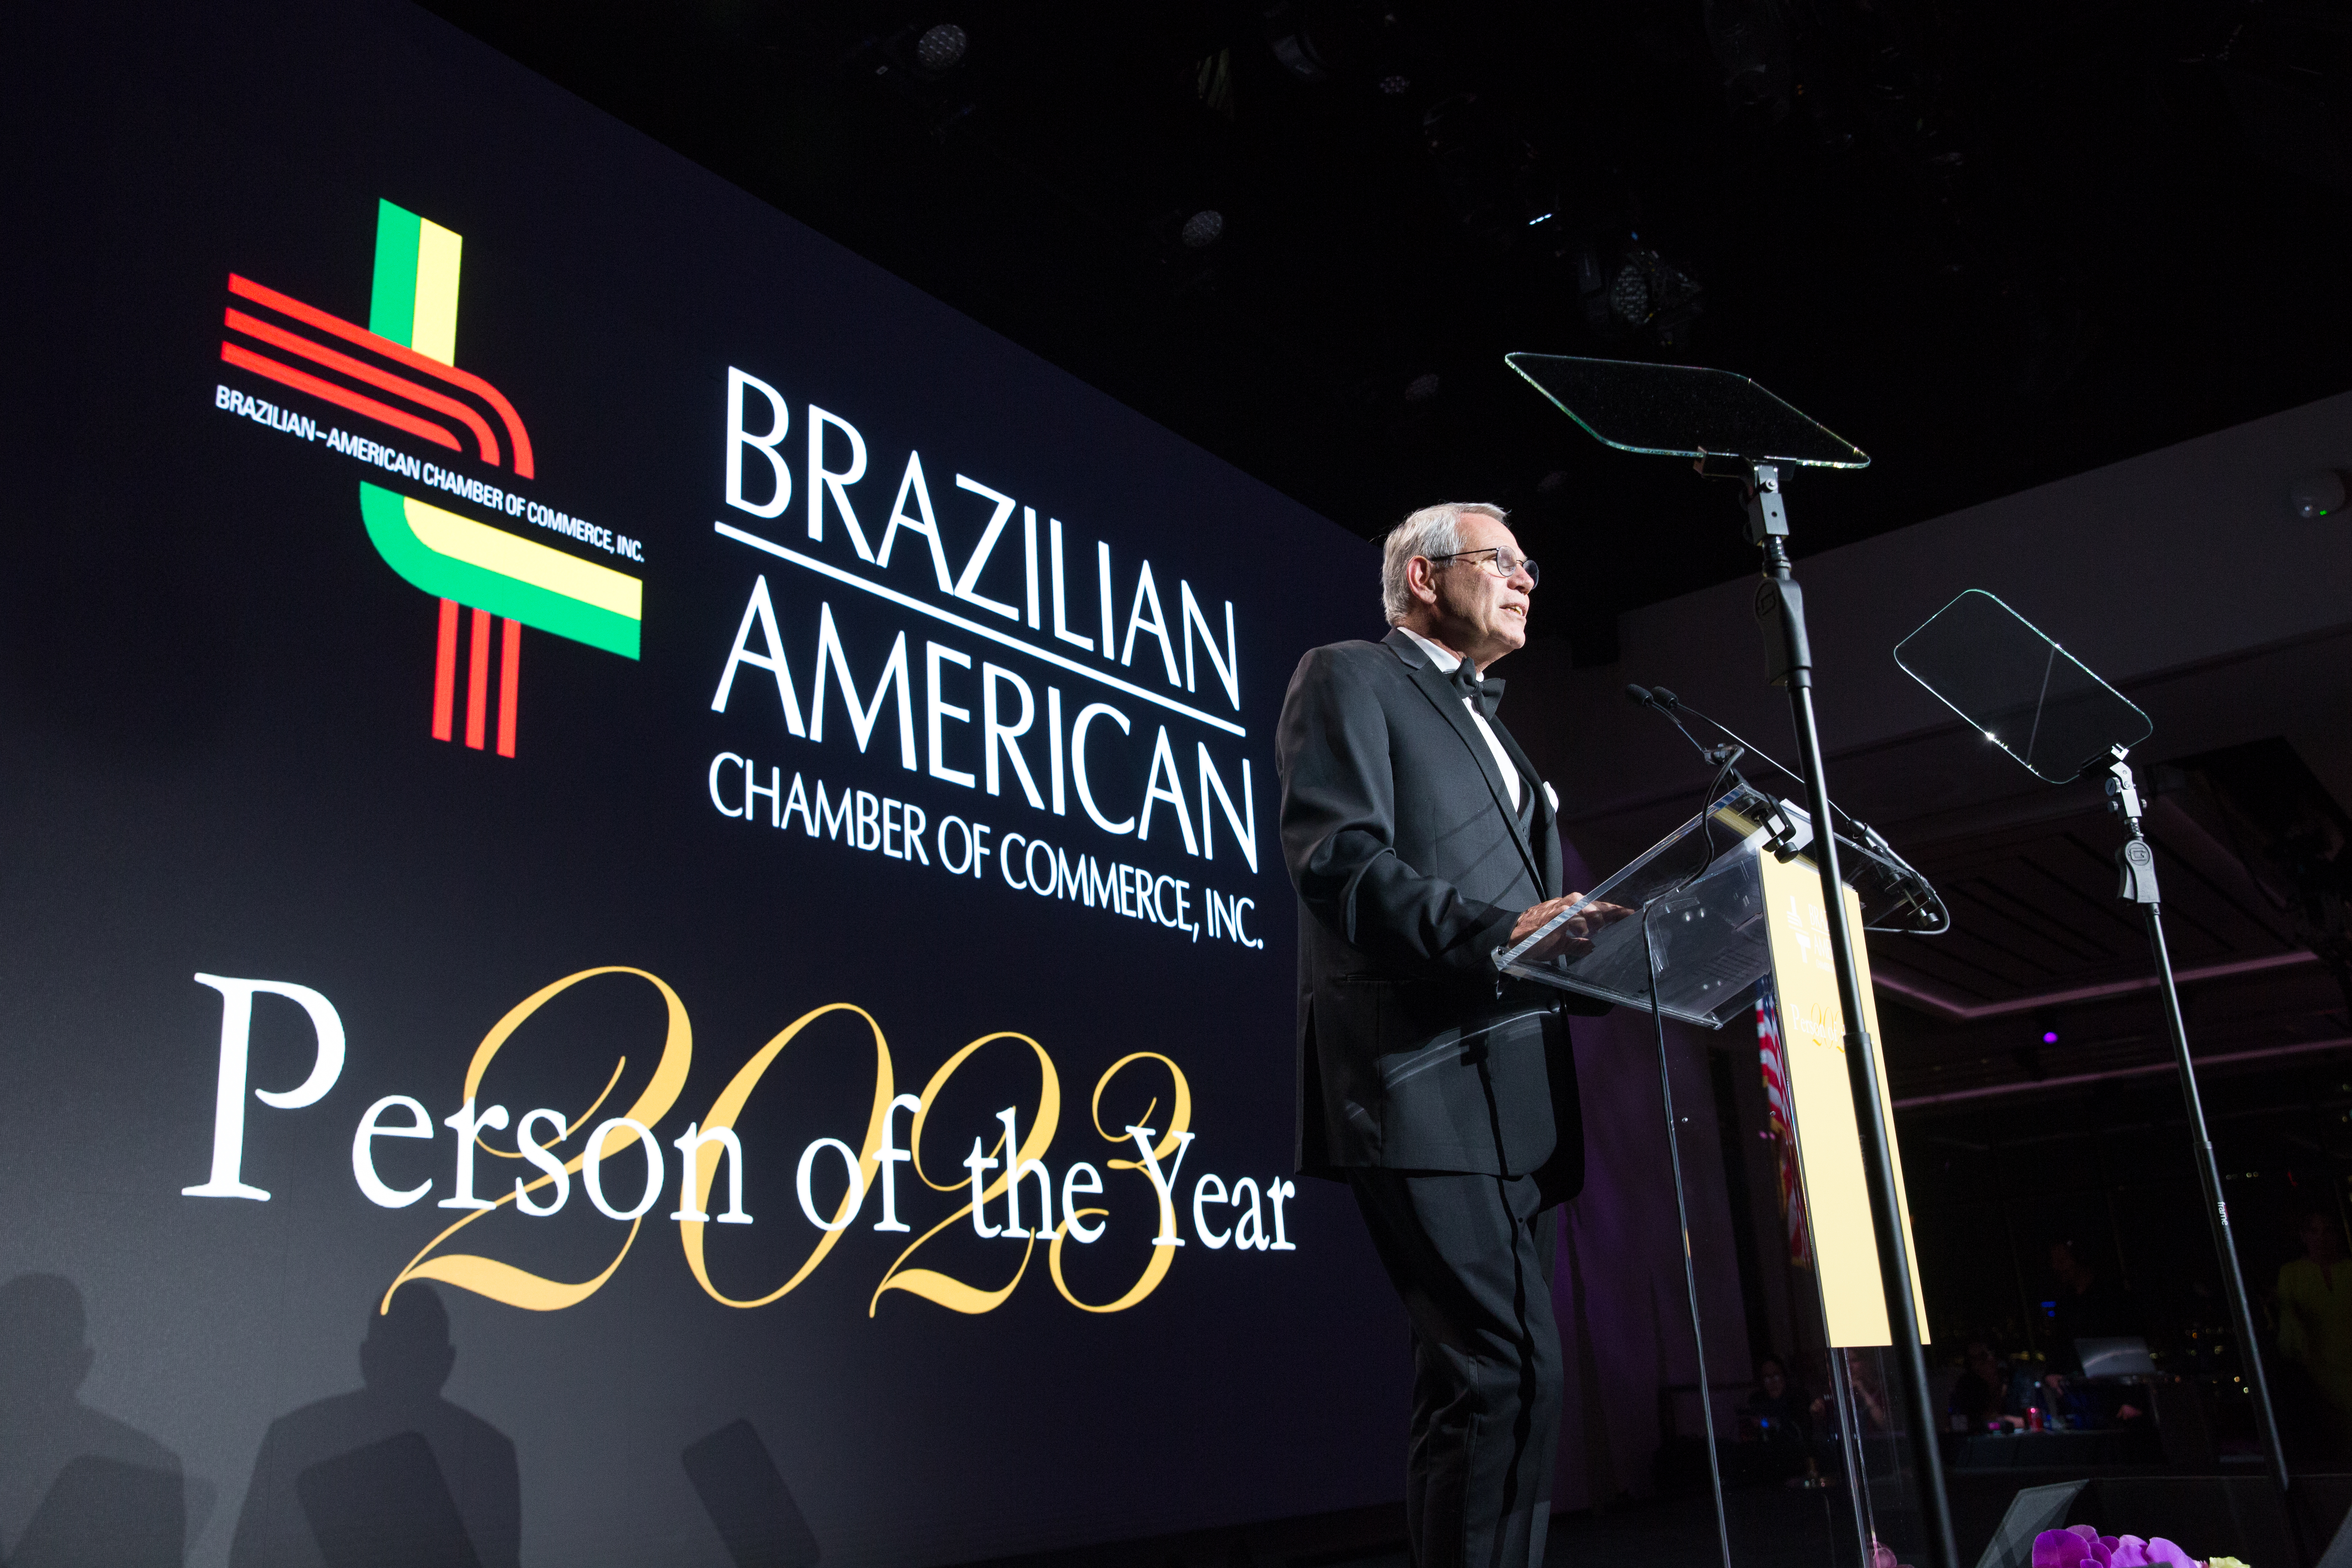 Brazilian-American Chamber of Commerce